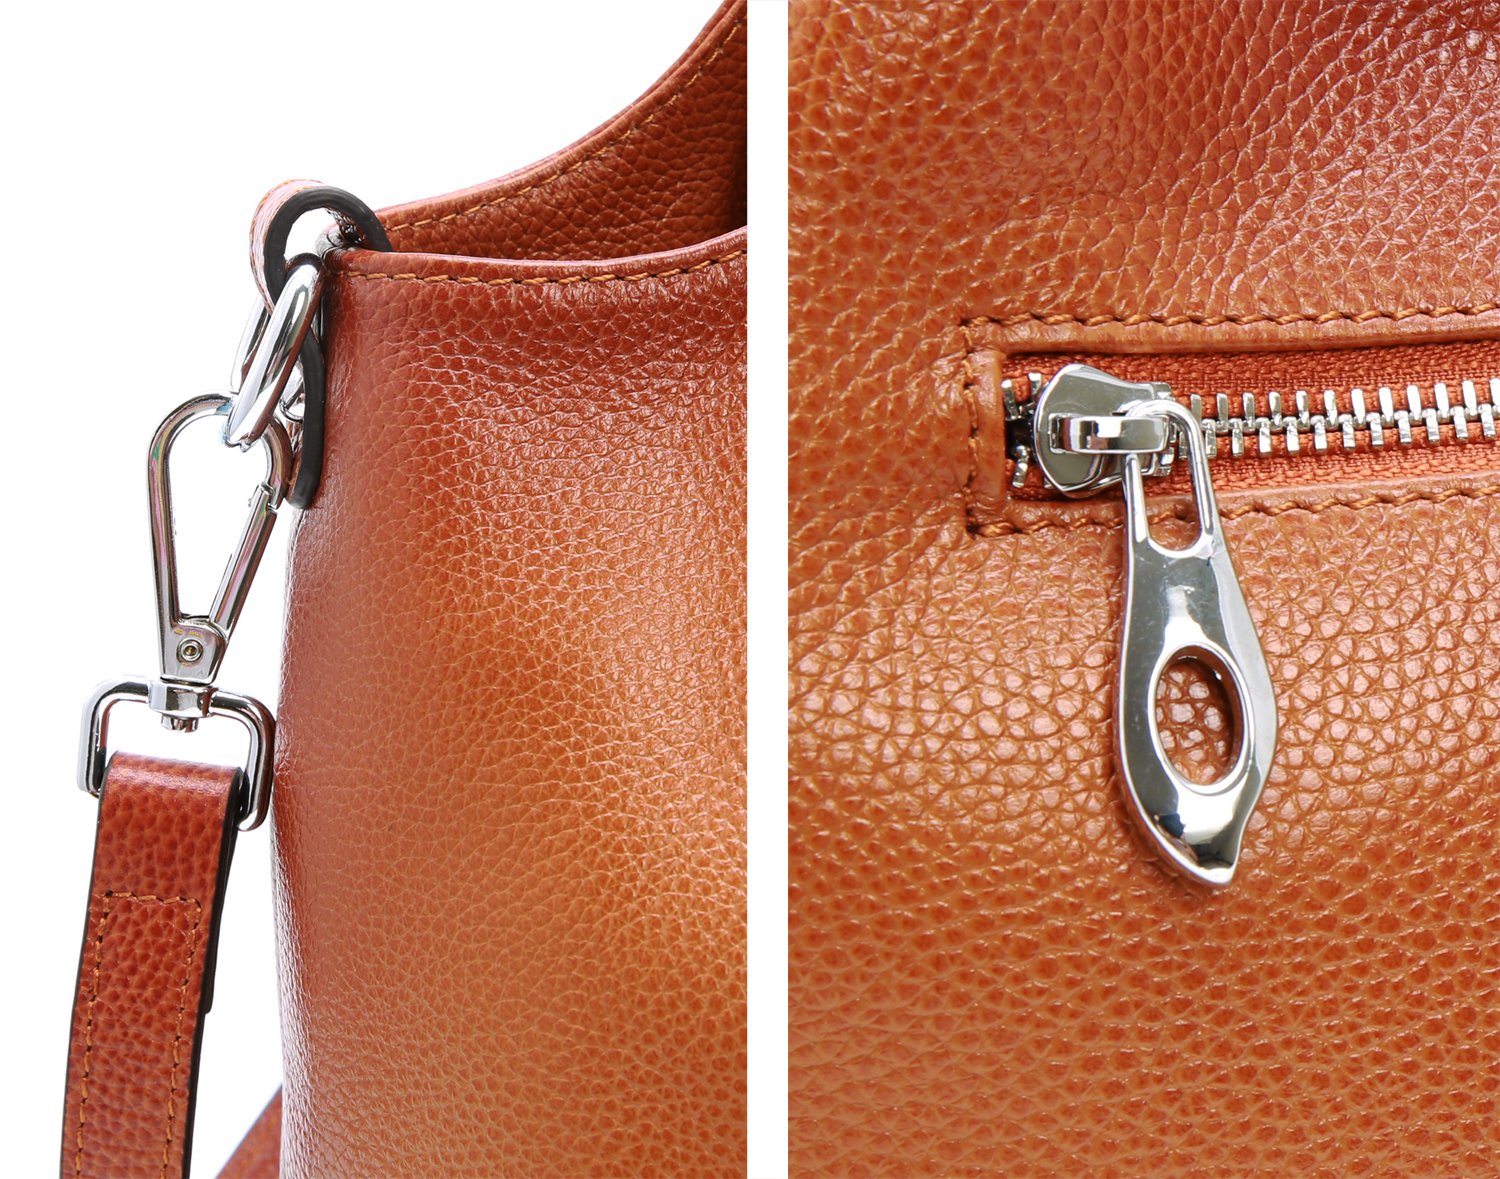 Iswee Genuine Leather Purses and Handbags for Women Shoulder Bag Top Handle Satchel Ladies Hobo Crossbody Bags